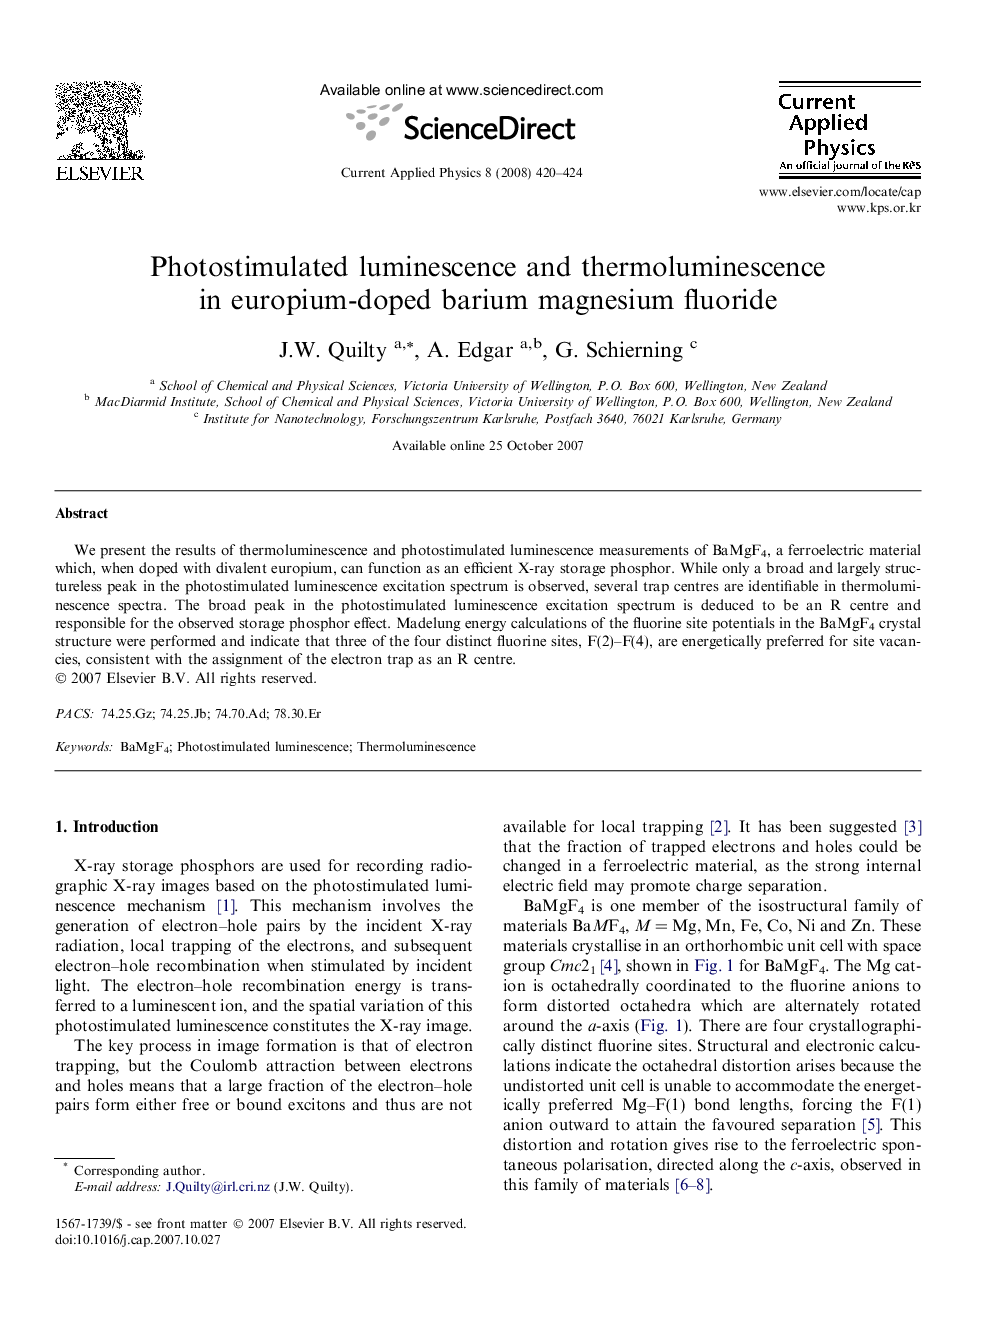 Photostimulated luminescence and thermoluminescence in europium-doped barium magnesium fluoride